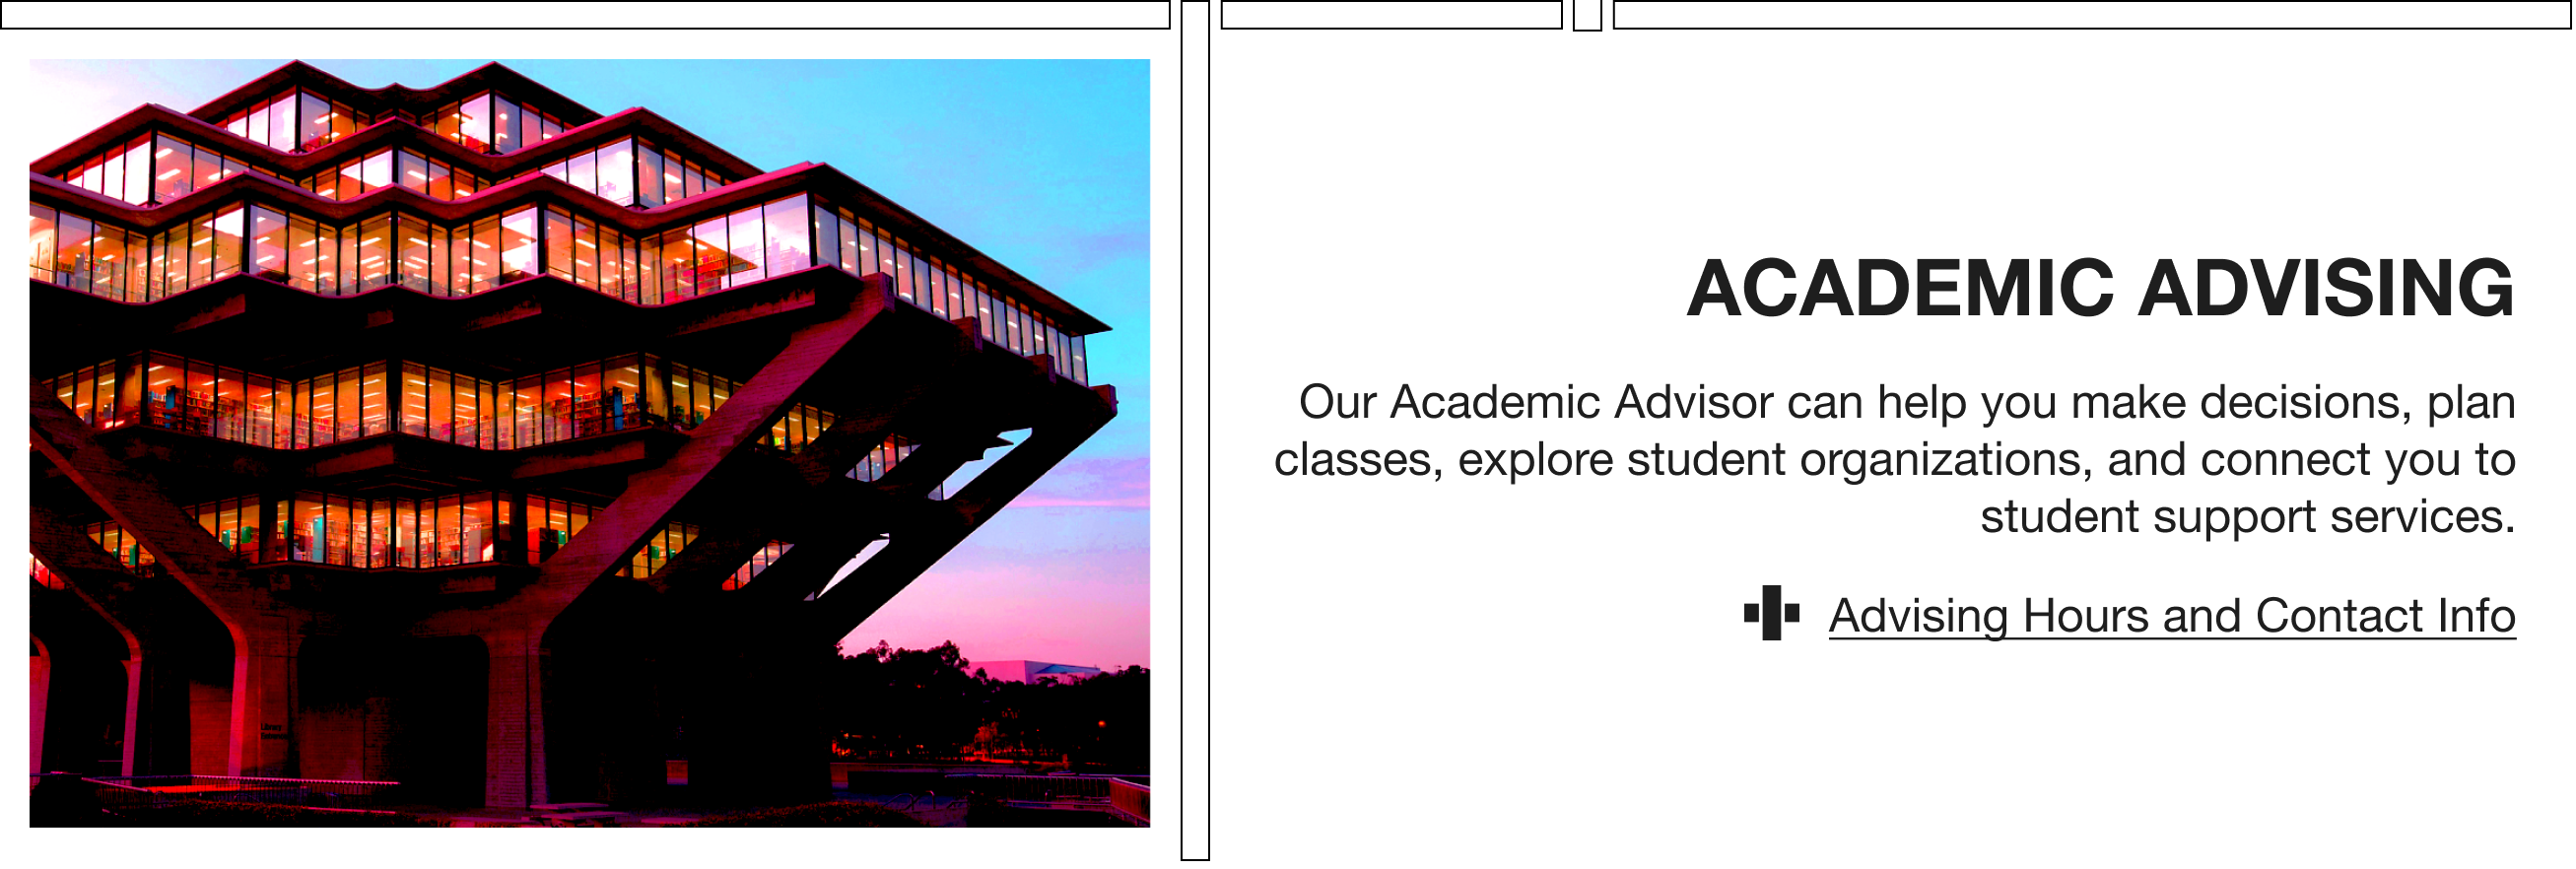 academic-advising-2.png